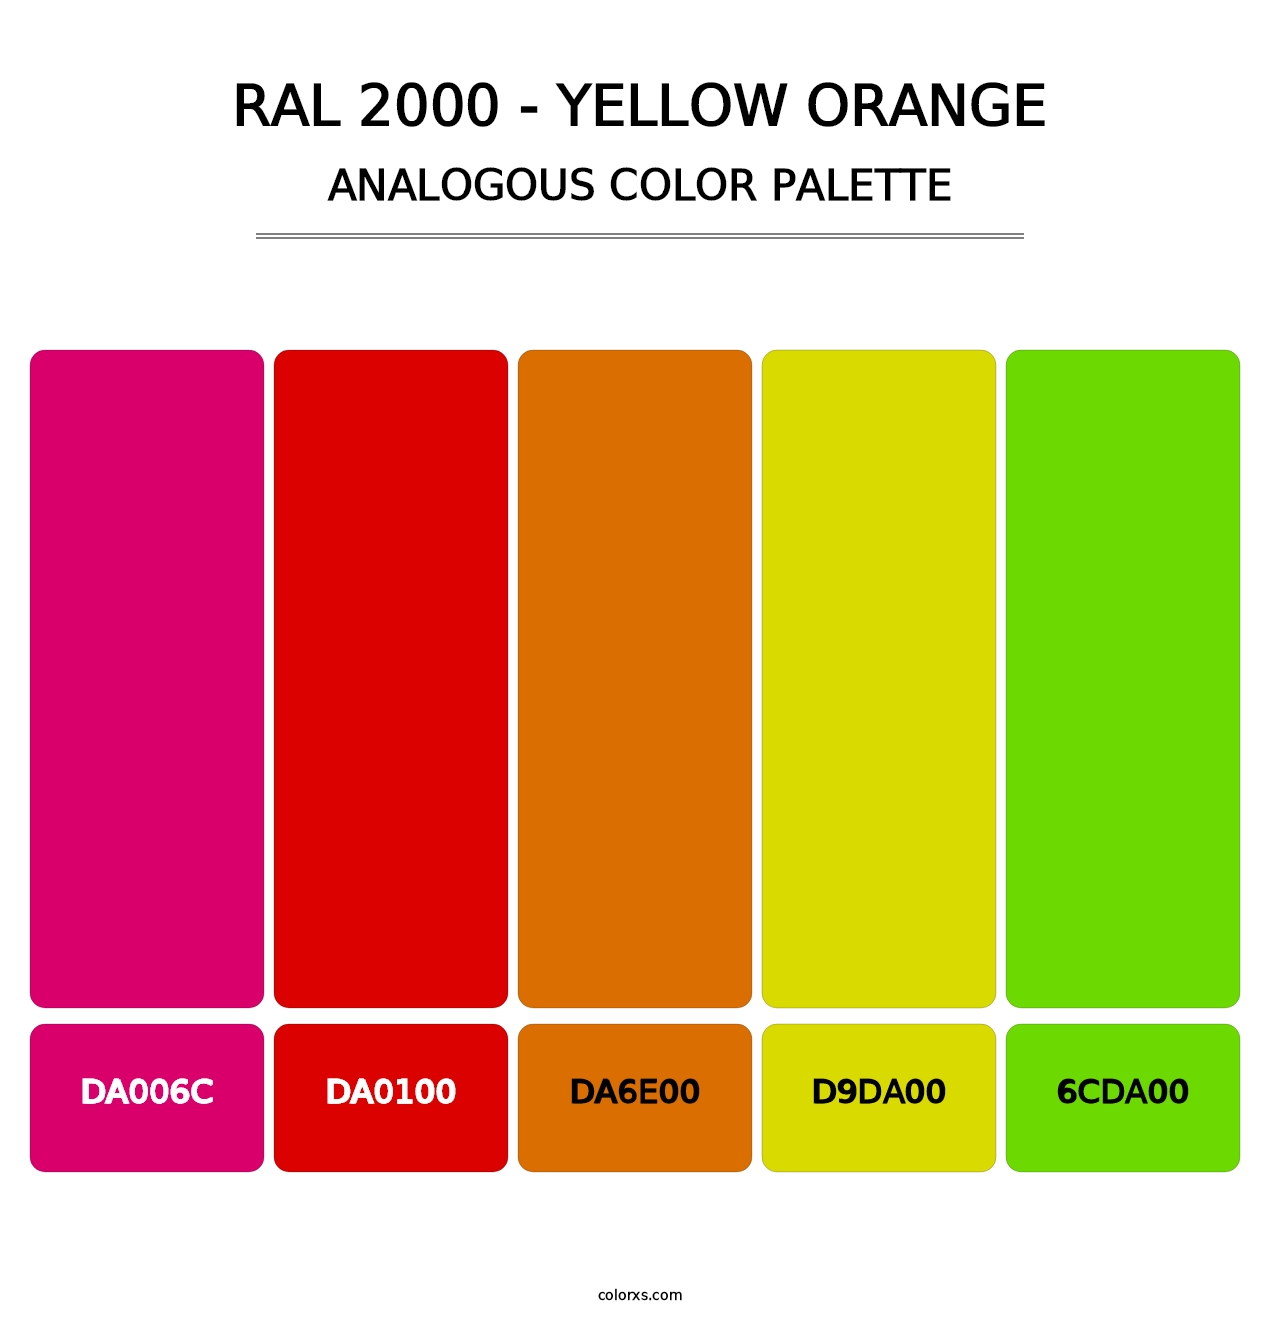 RAL 2000 - Yellow Orange - Analogous Color Palette